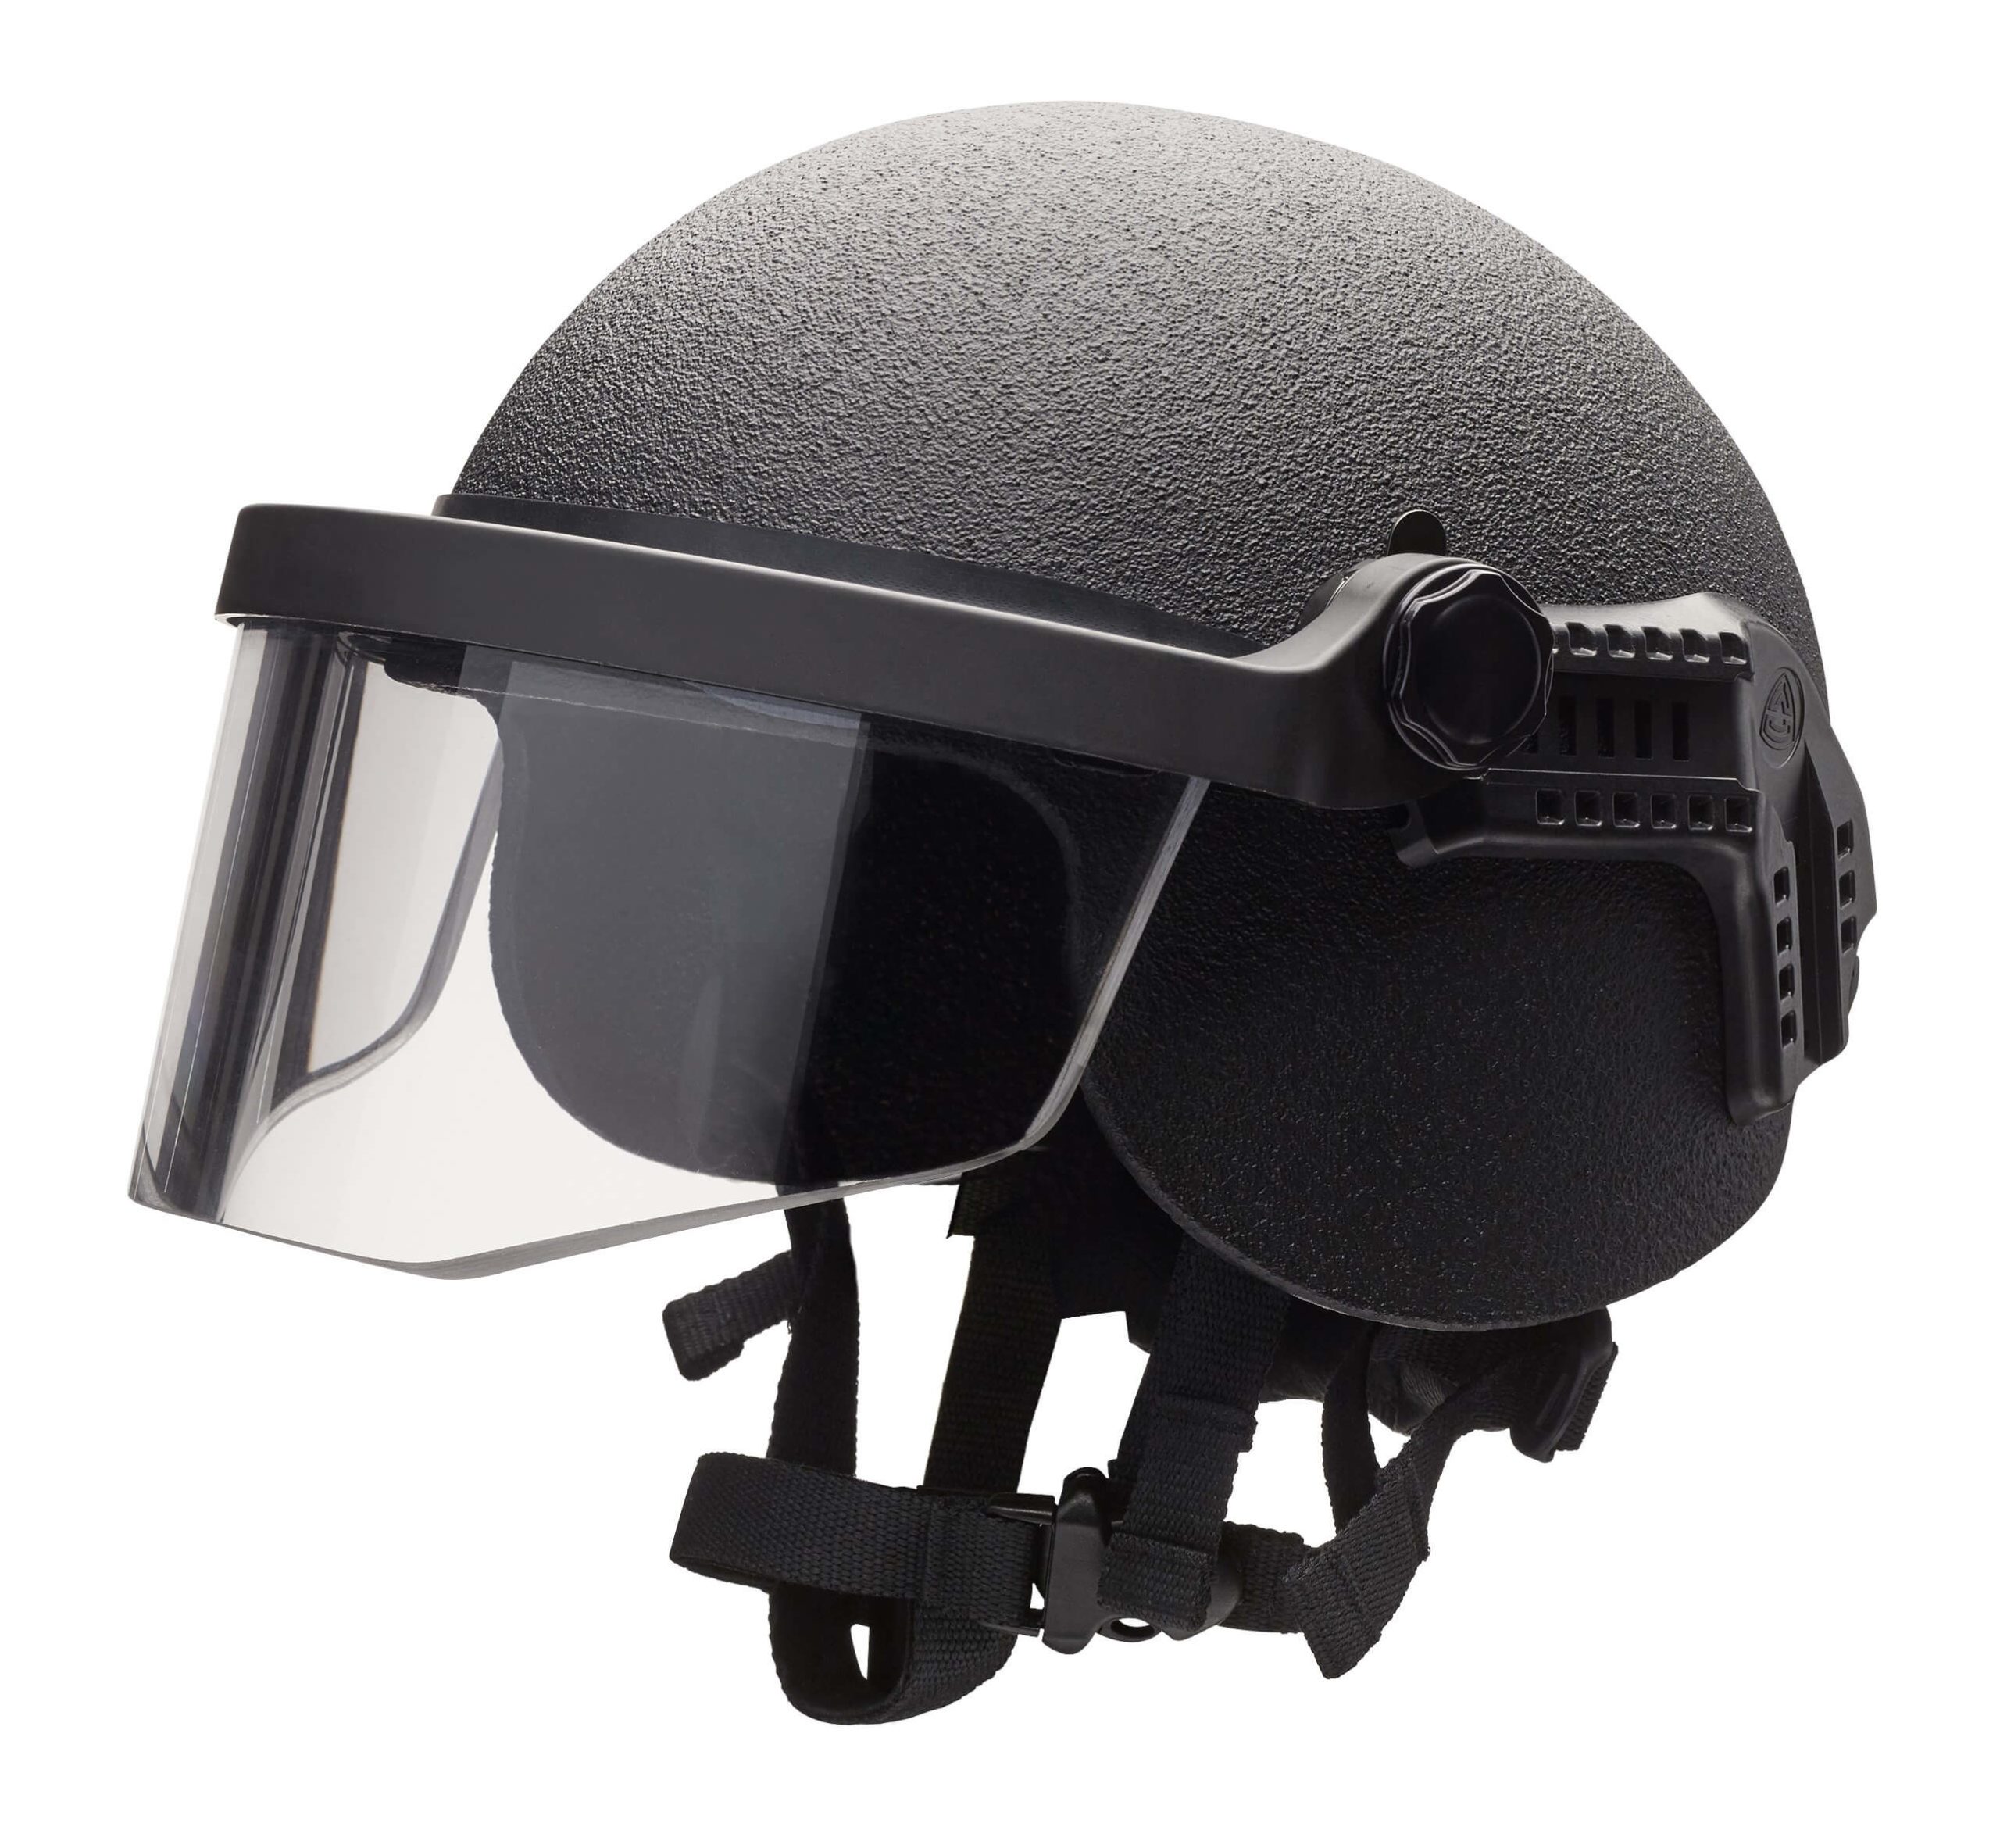 Ballistic titanium helmets by ULBRICHTS Protection now also